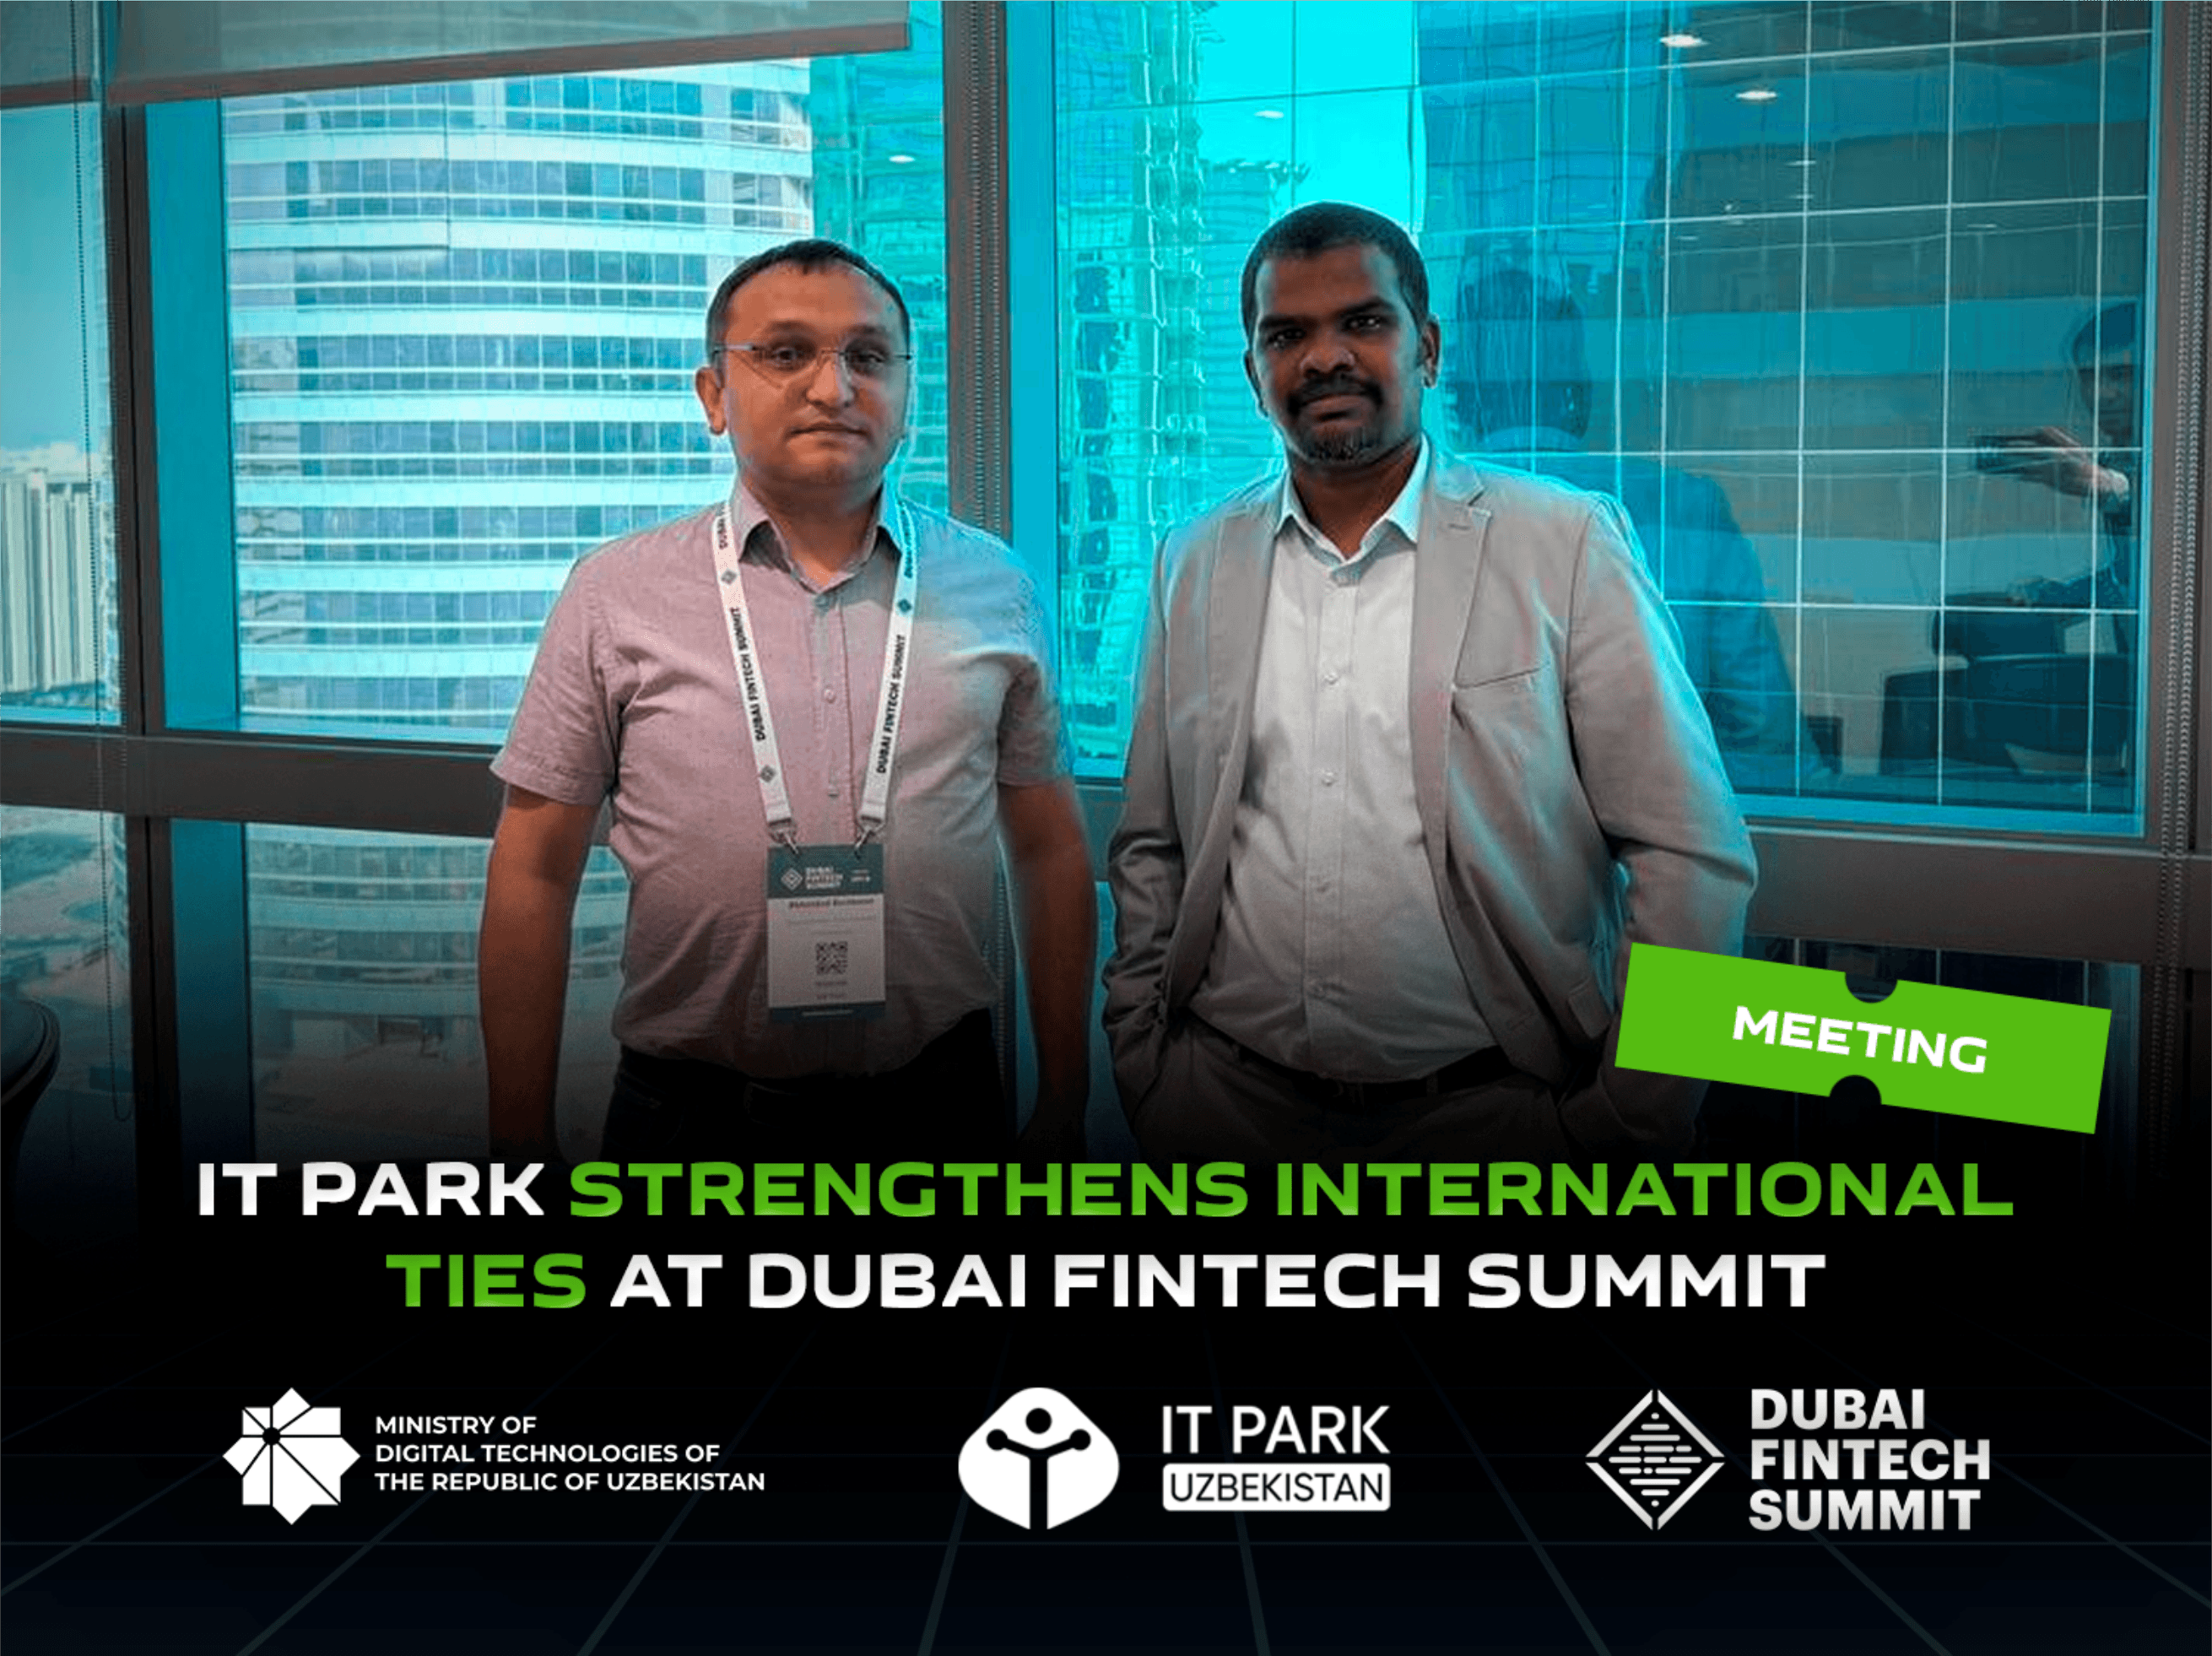 IT Park is strengthening international ties at Dubai Fintech Summit